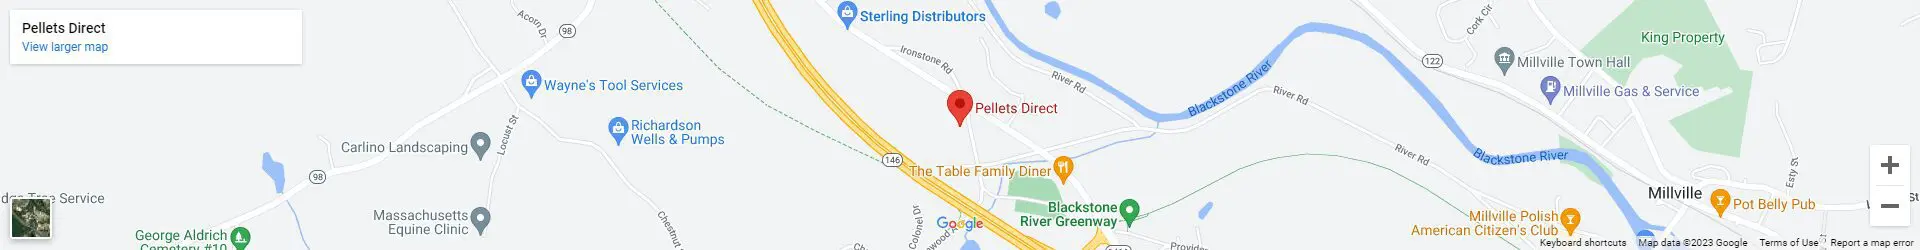 Pellets Direct™ Location Map